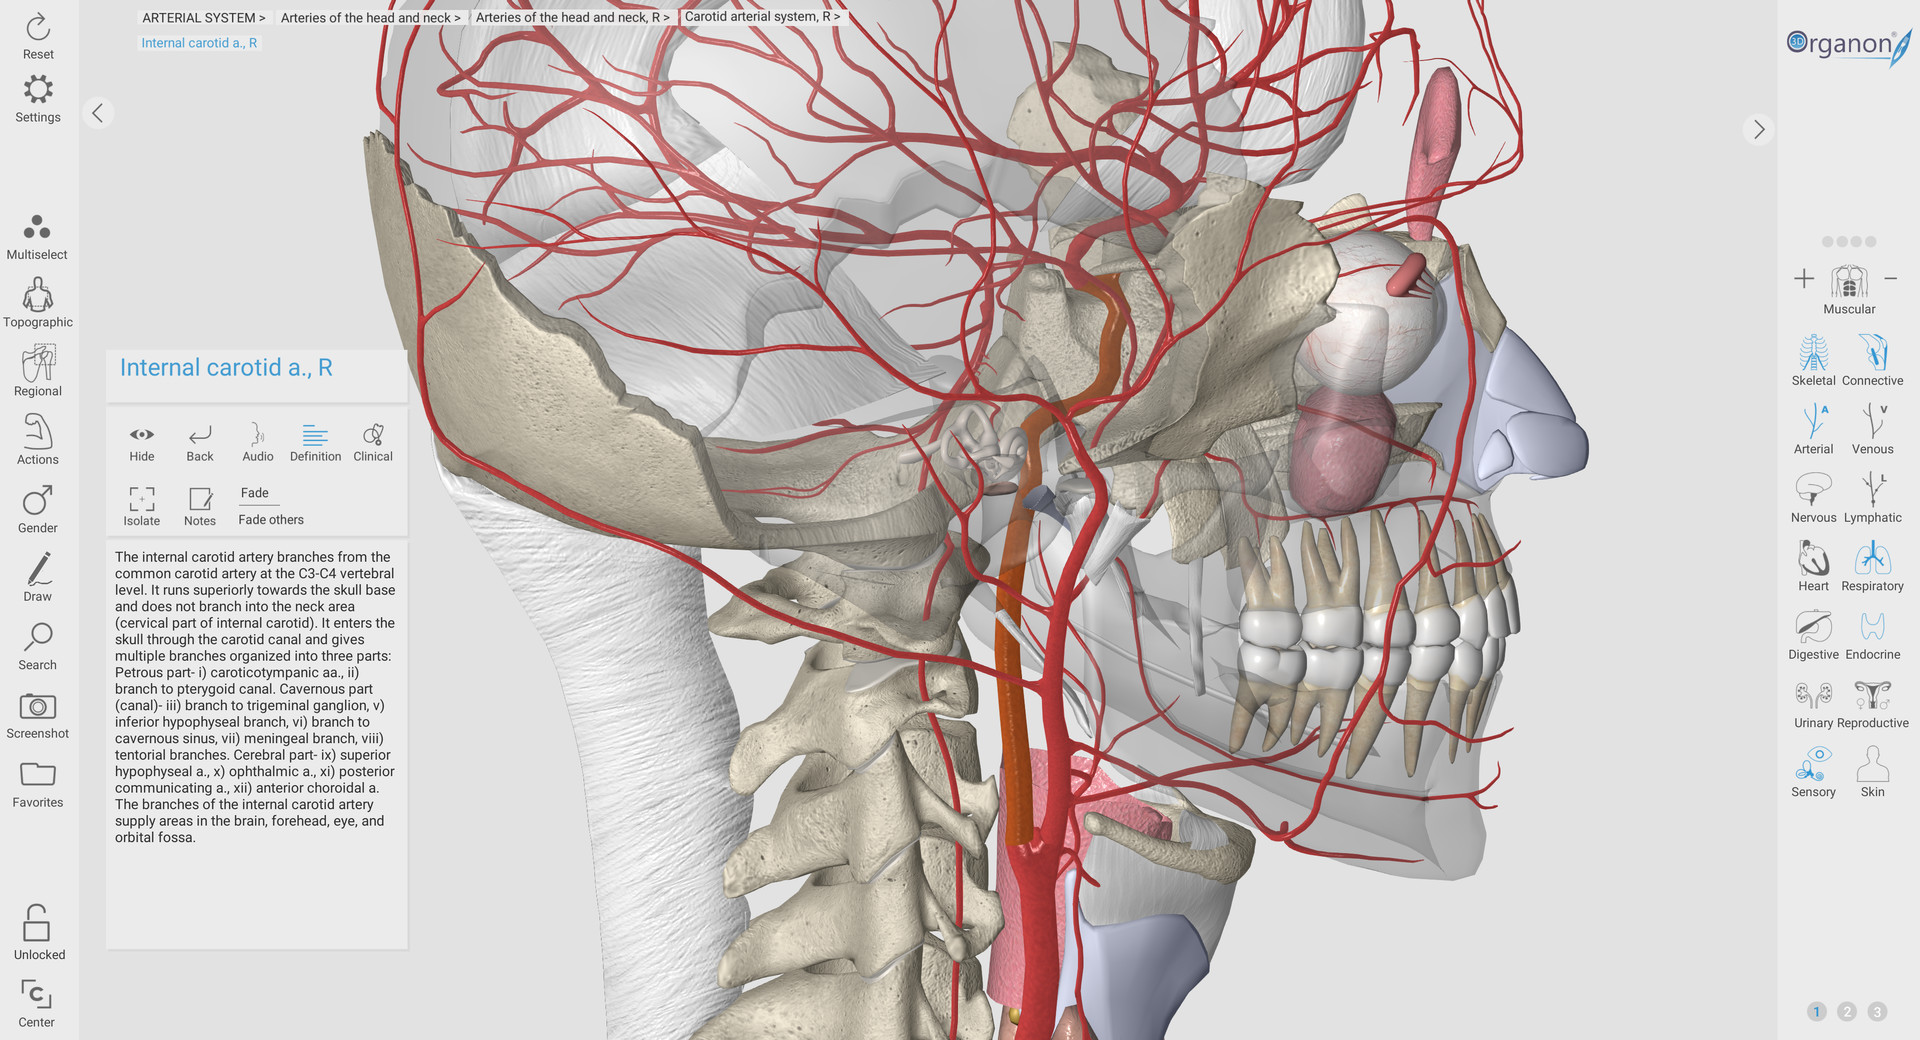 3D器官解剖中文版